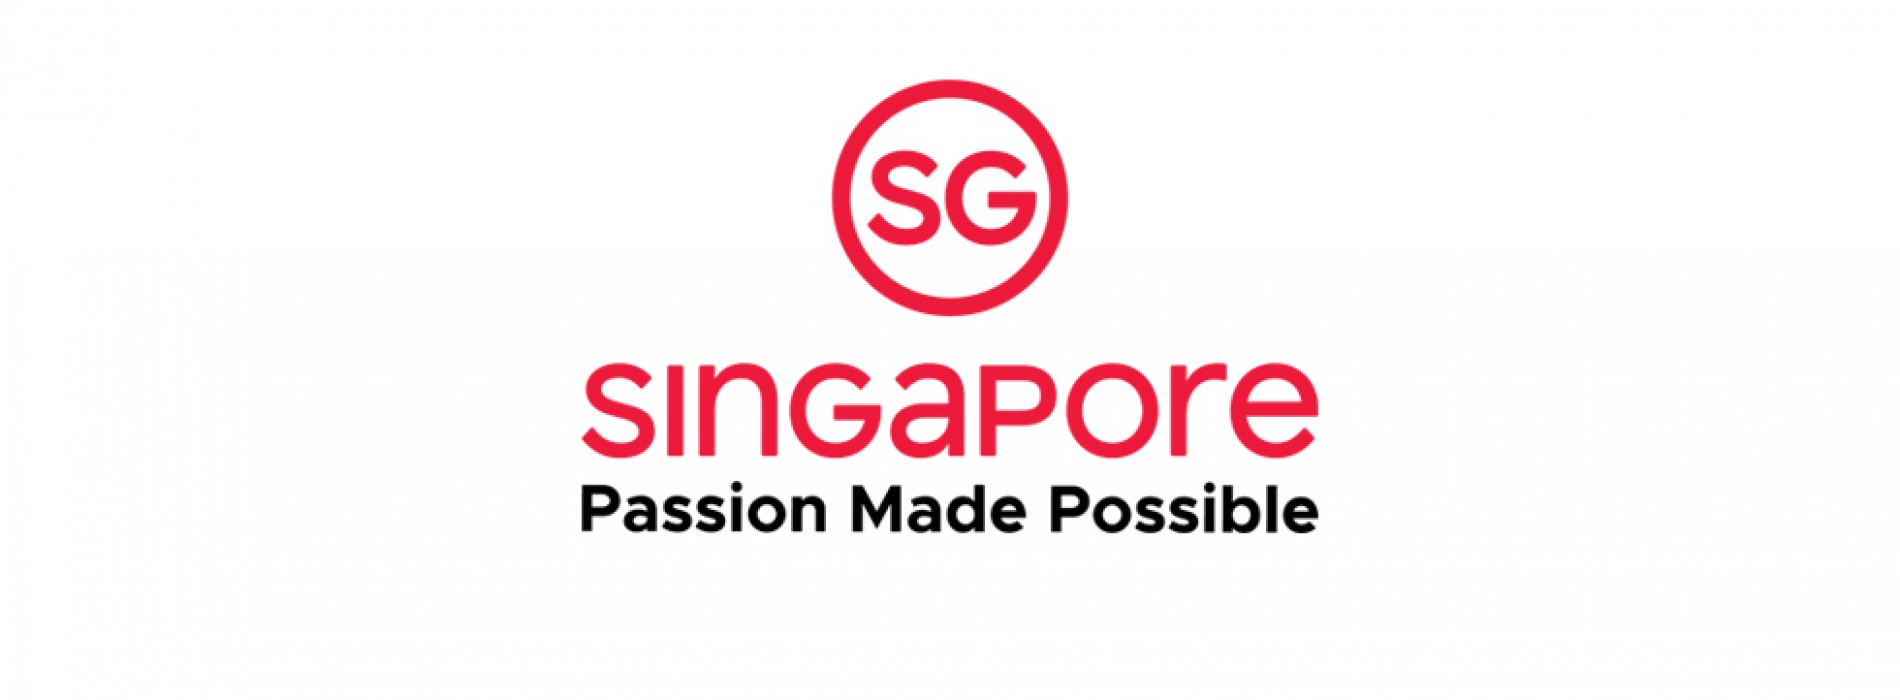 Singapore Tourism Board and Singapore Economic Development Board launch